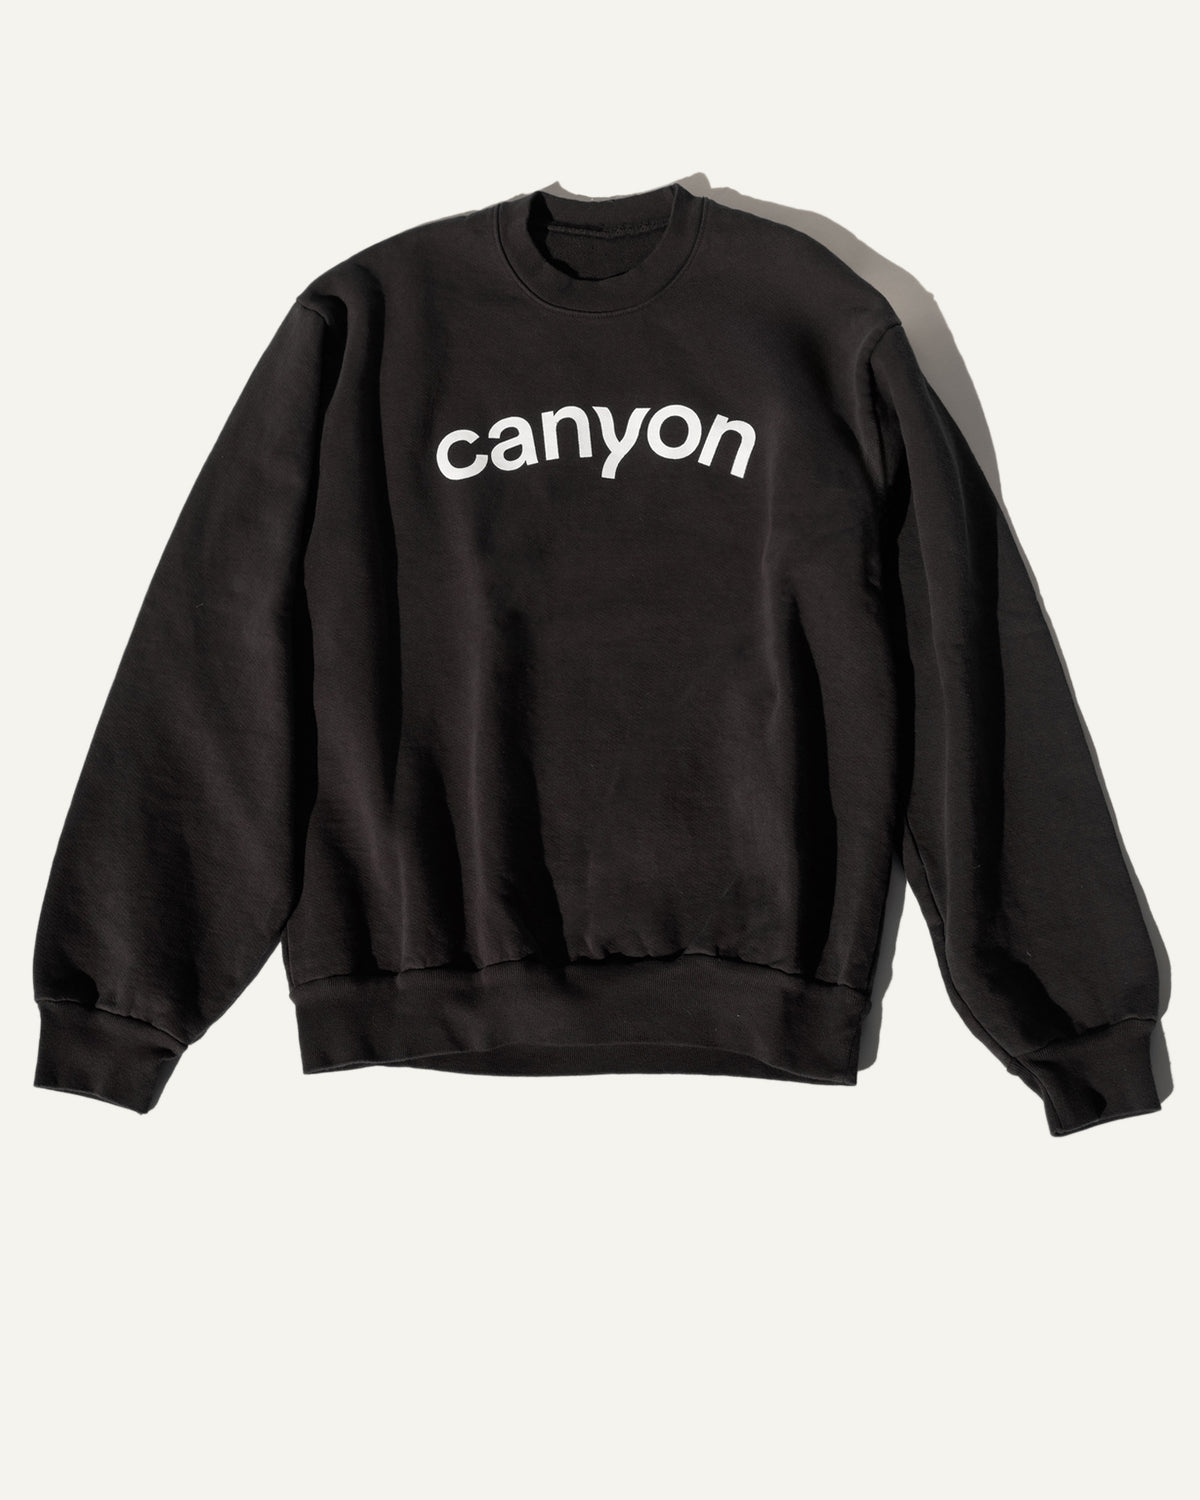 Canyon Sweatshirt in Black - Canyon Coffee